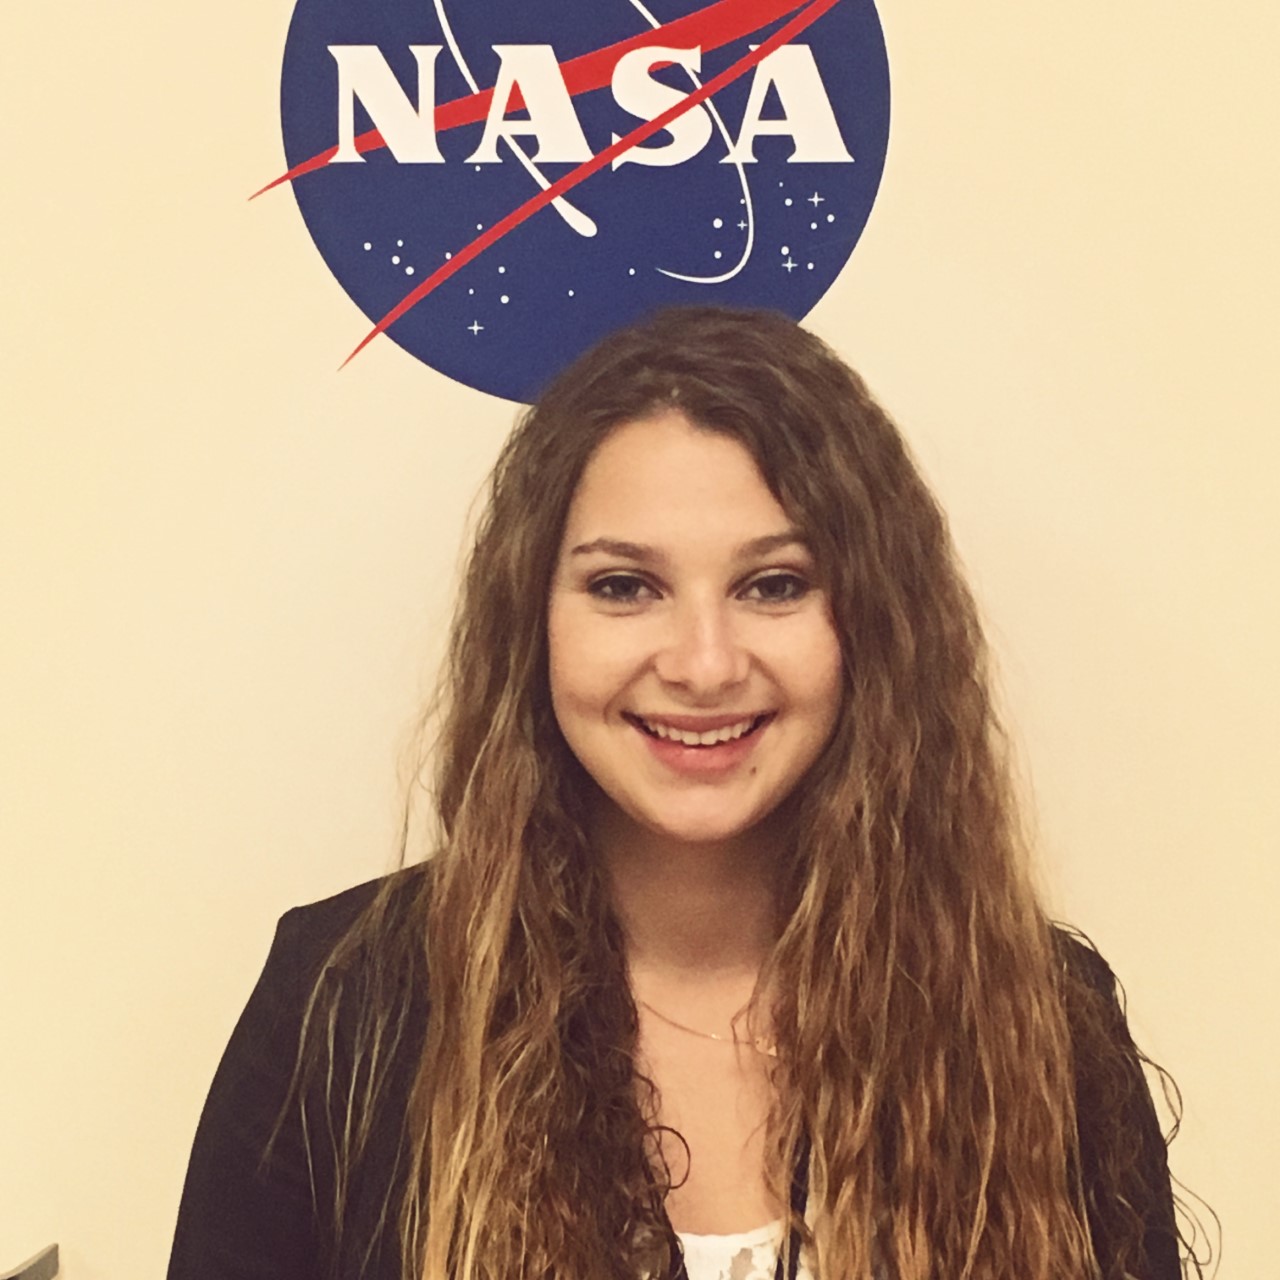 Headshot of Kassidy Mclaughlin with NASA logo.